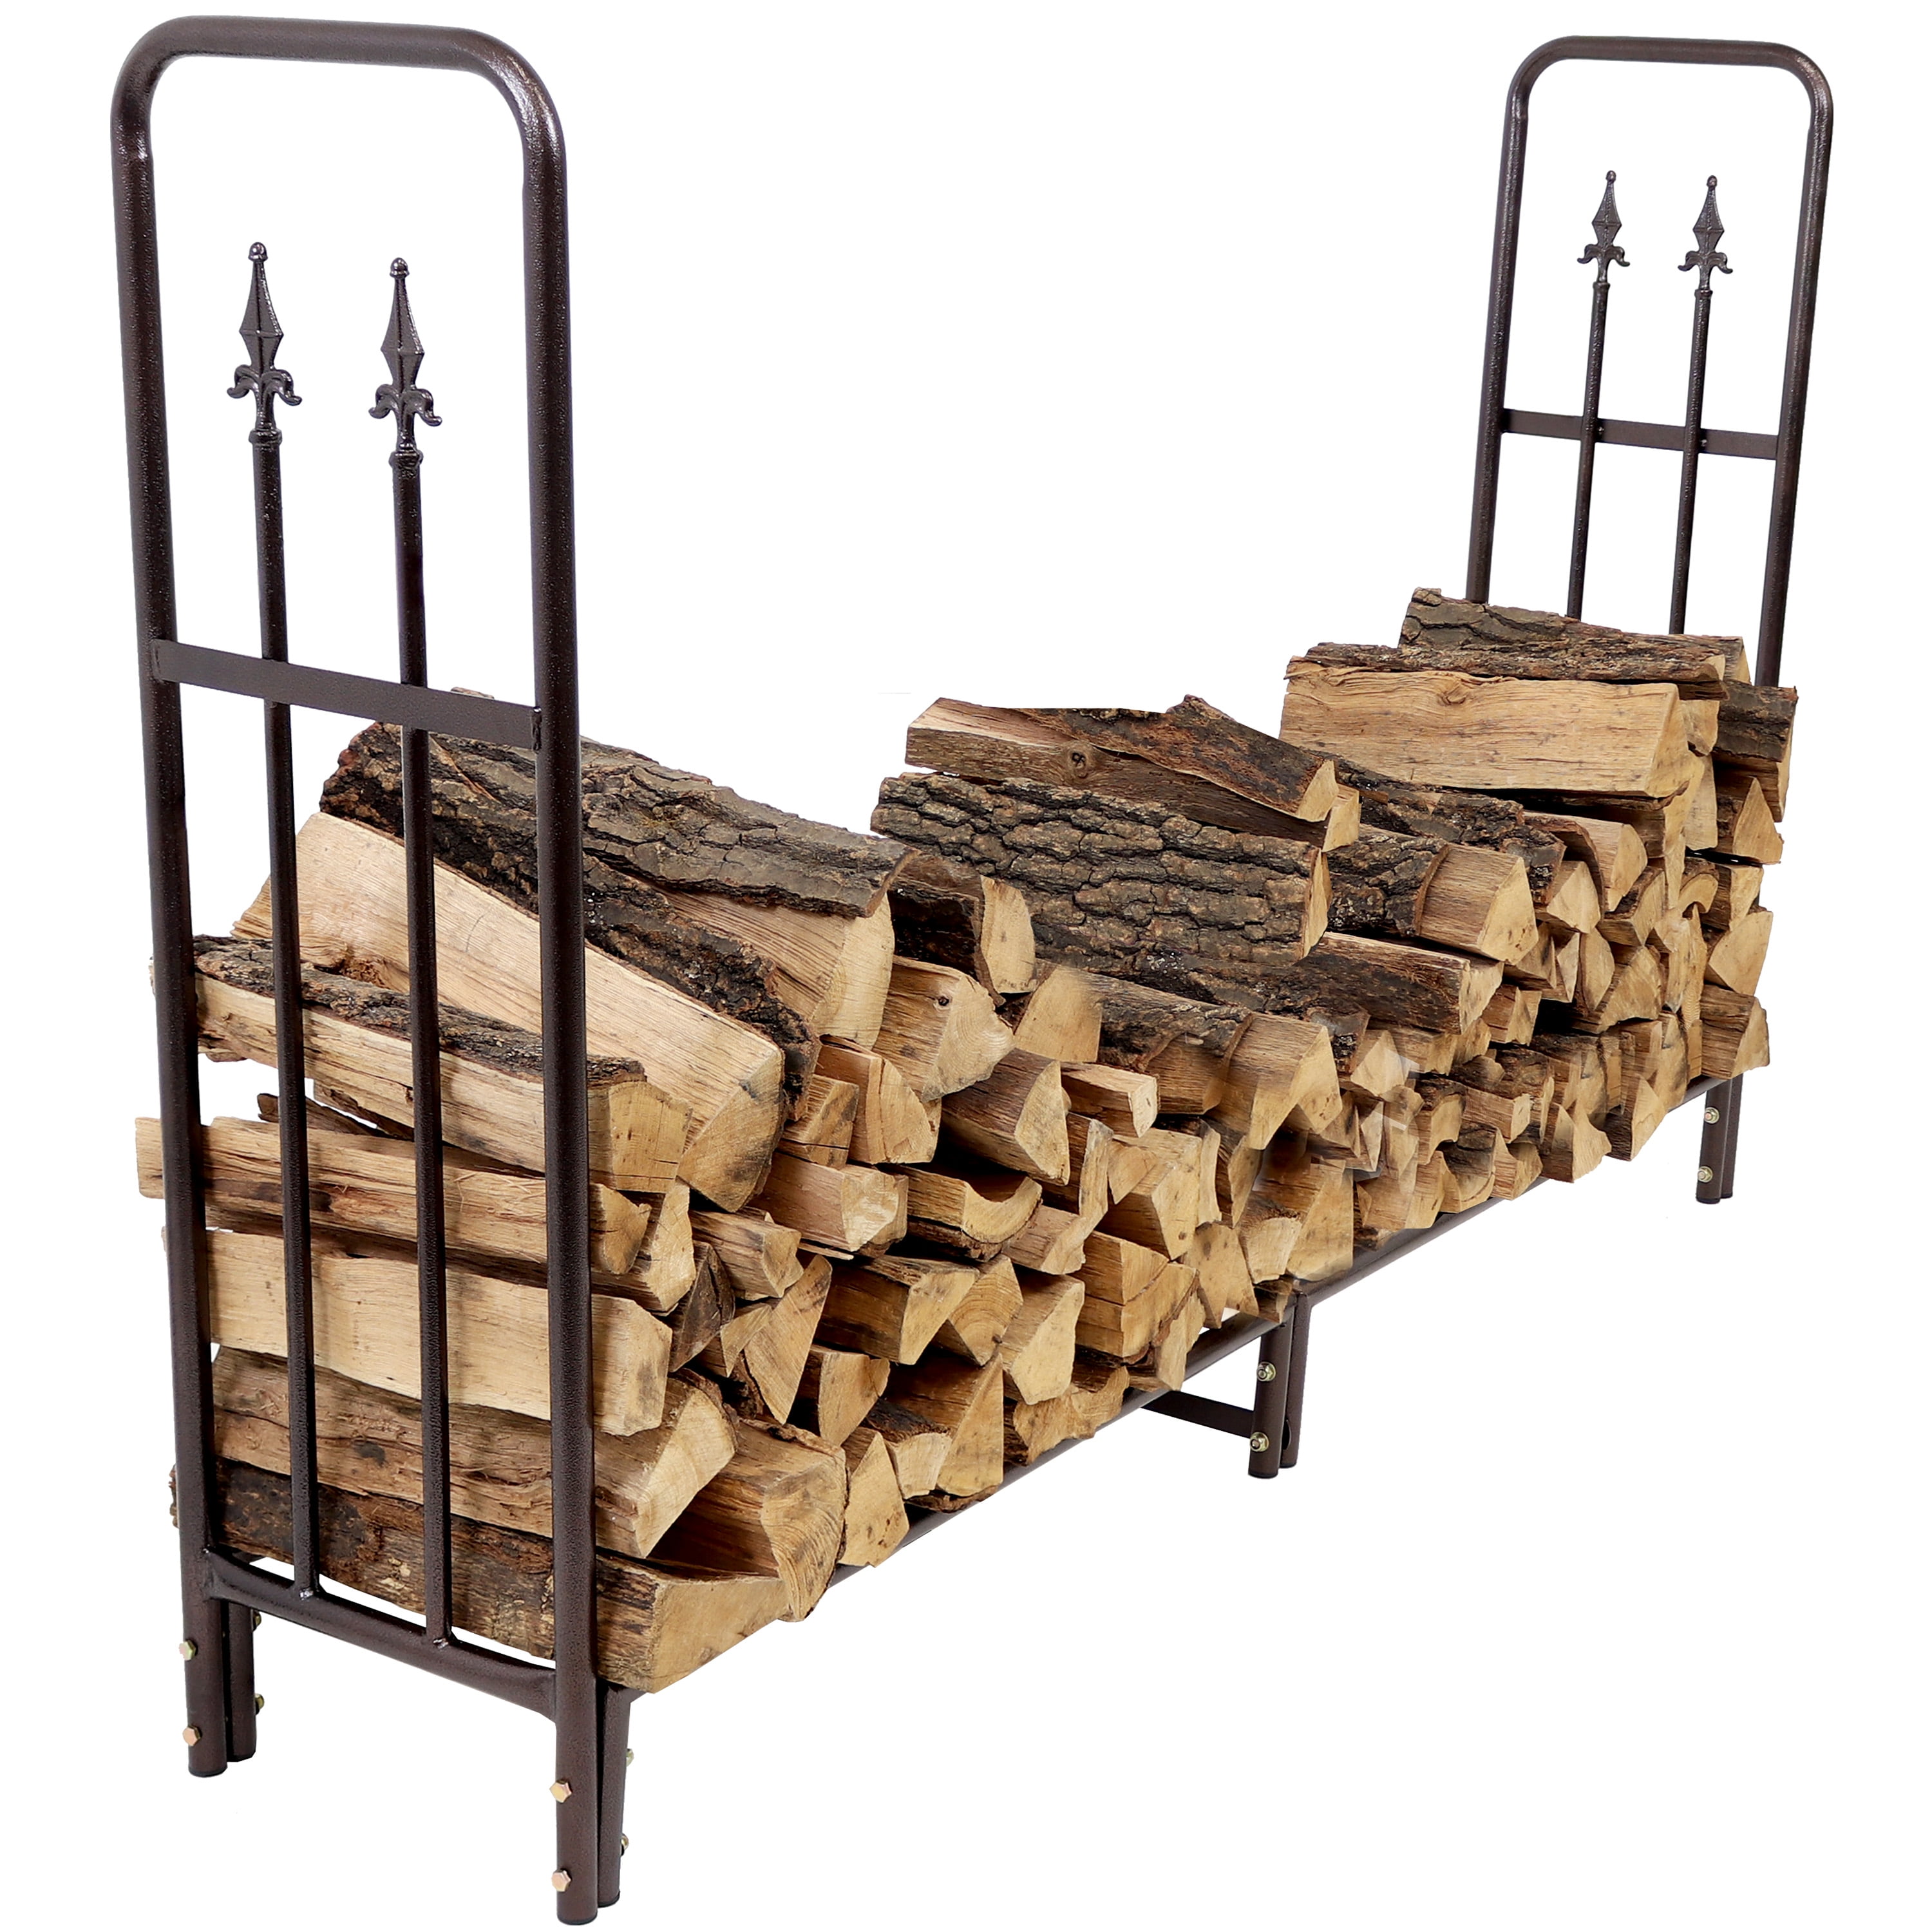 Sunnydaze 2' Indoor/Outdoor Firewood Log Rack Steel Fireplace Storage Holder 